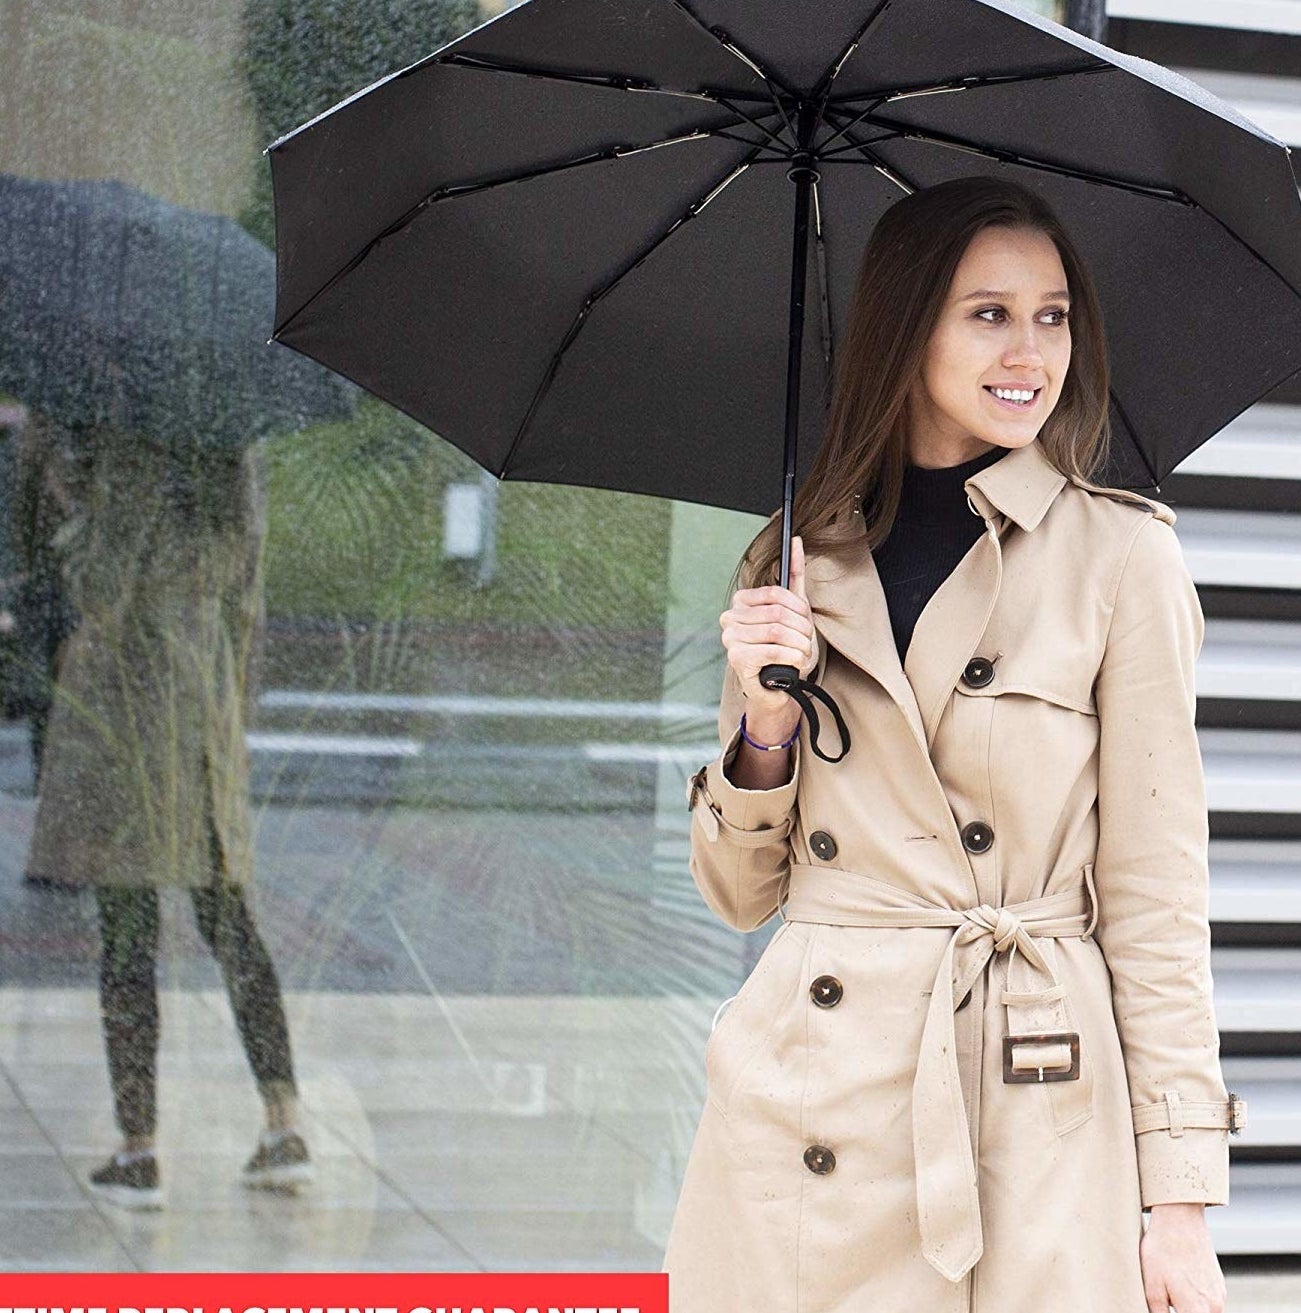 model holding black umbrella